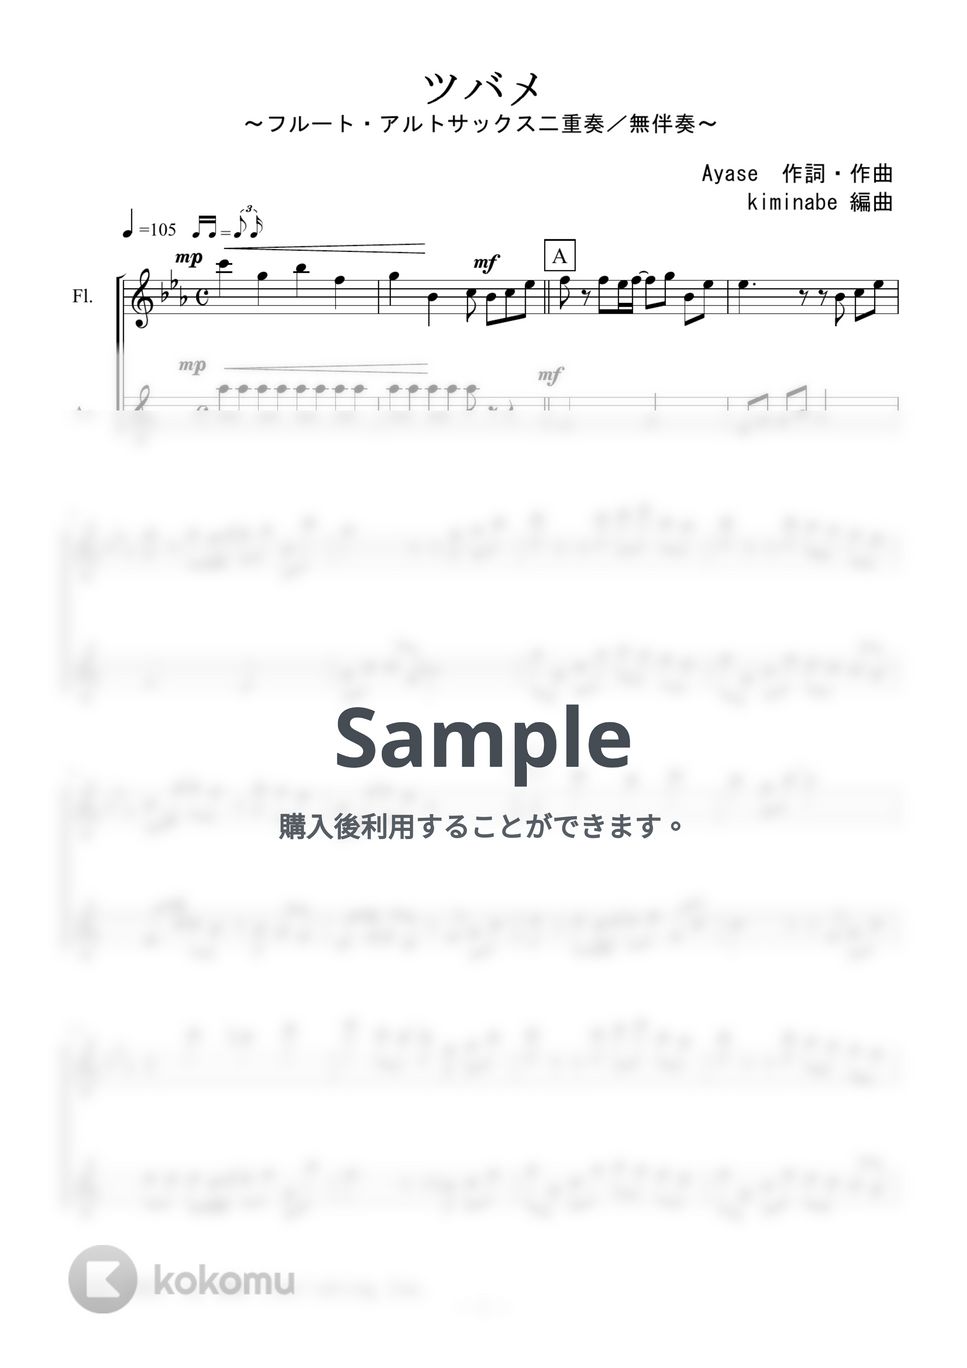 YOASOBI - ツバメ (フルート・アルトサックス二重奏／無伴奏) by kiminabe